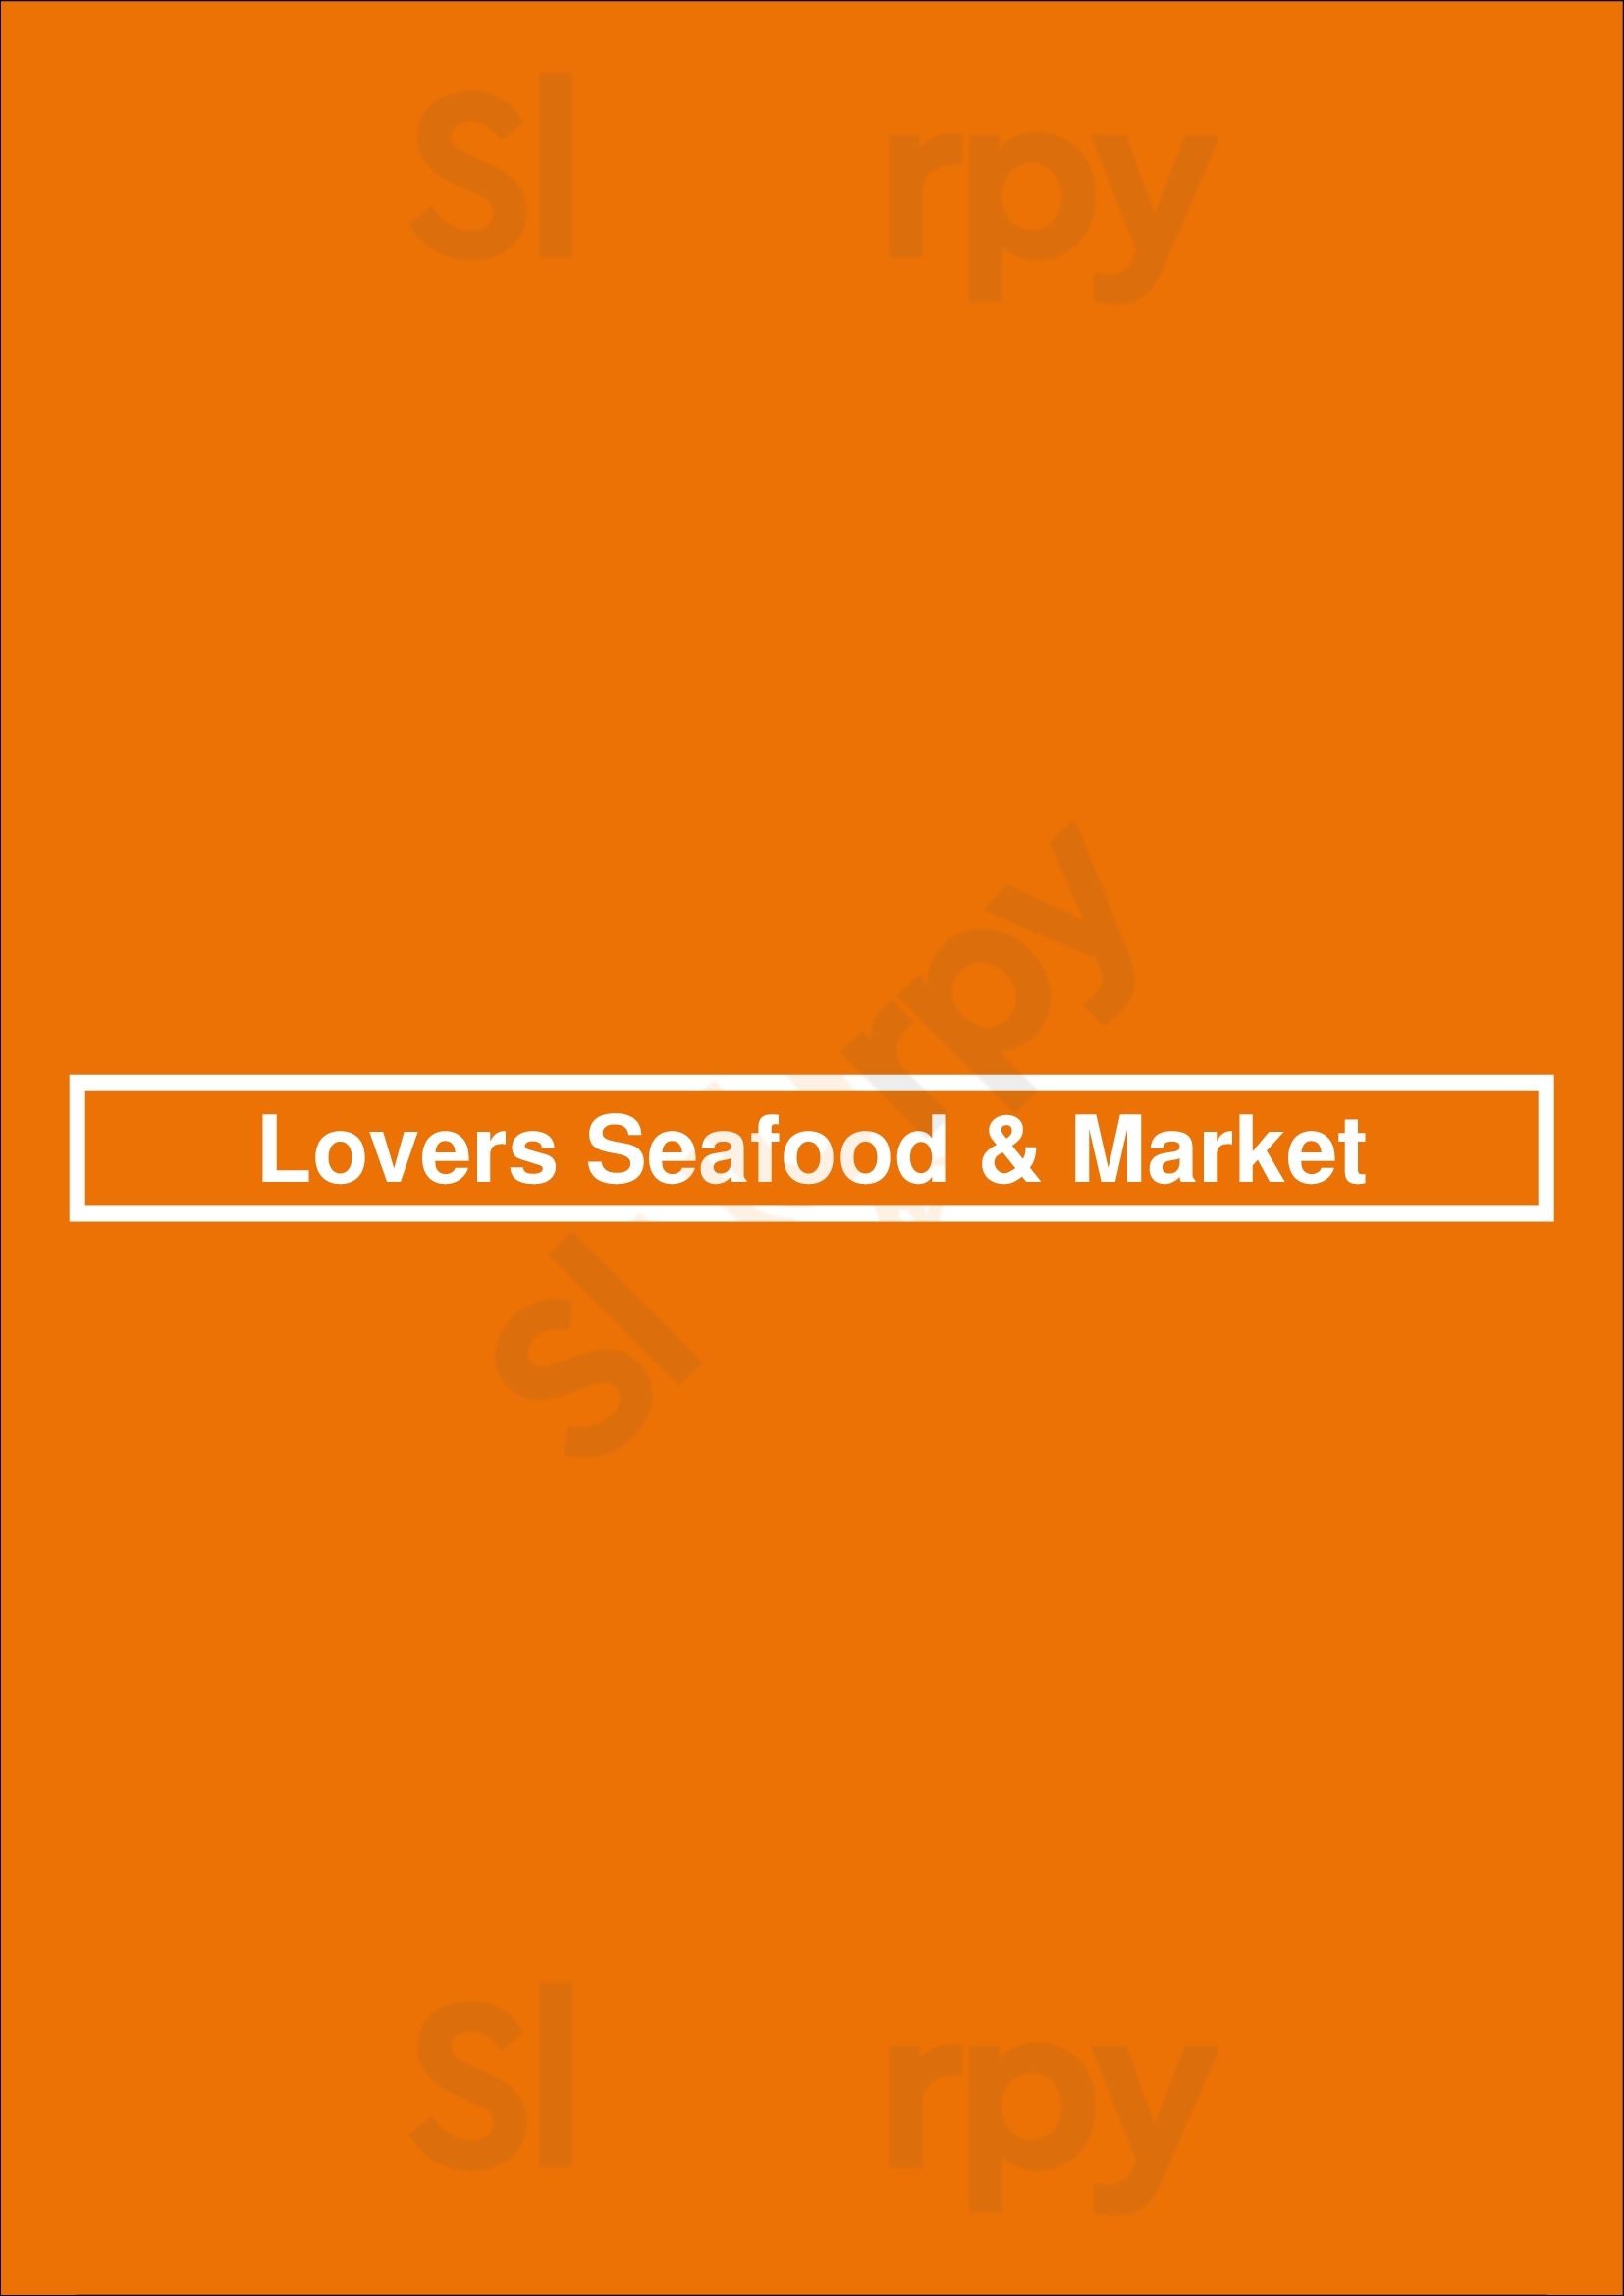 Lovers Seafood & Market Dallas Menu - 1